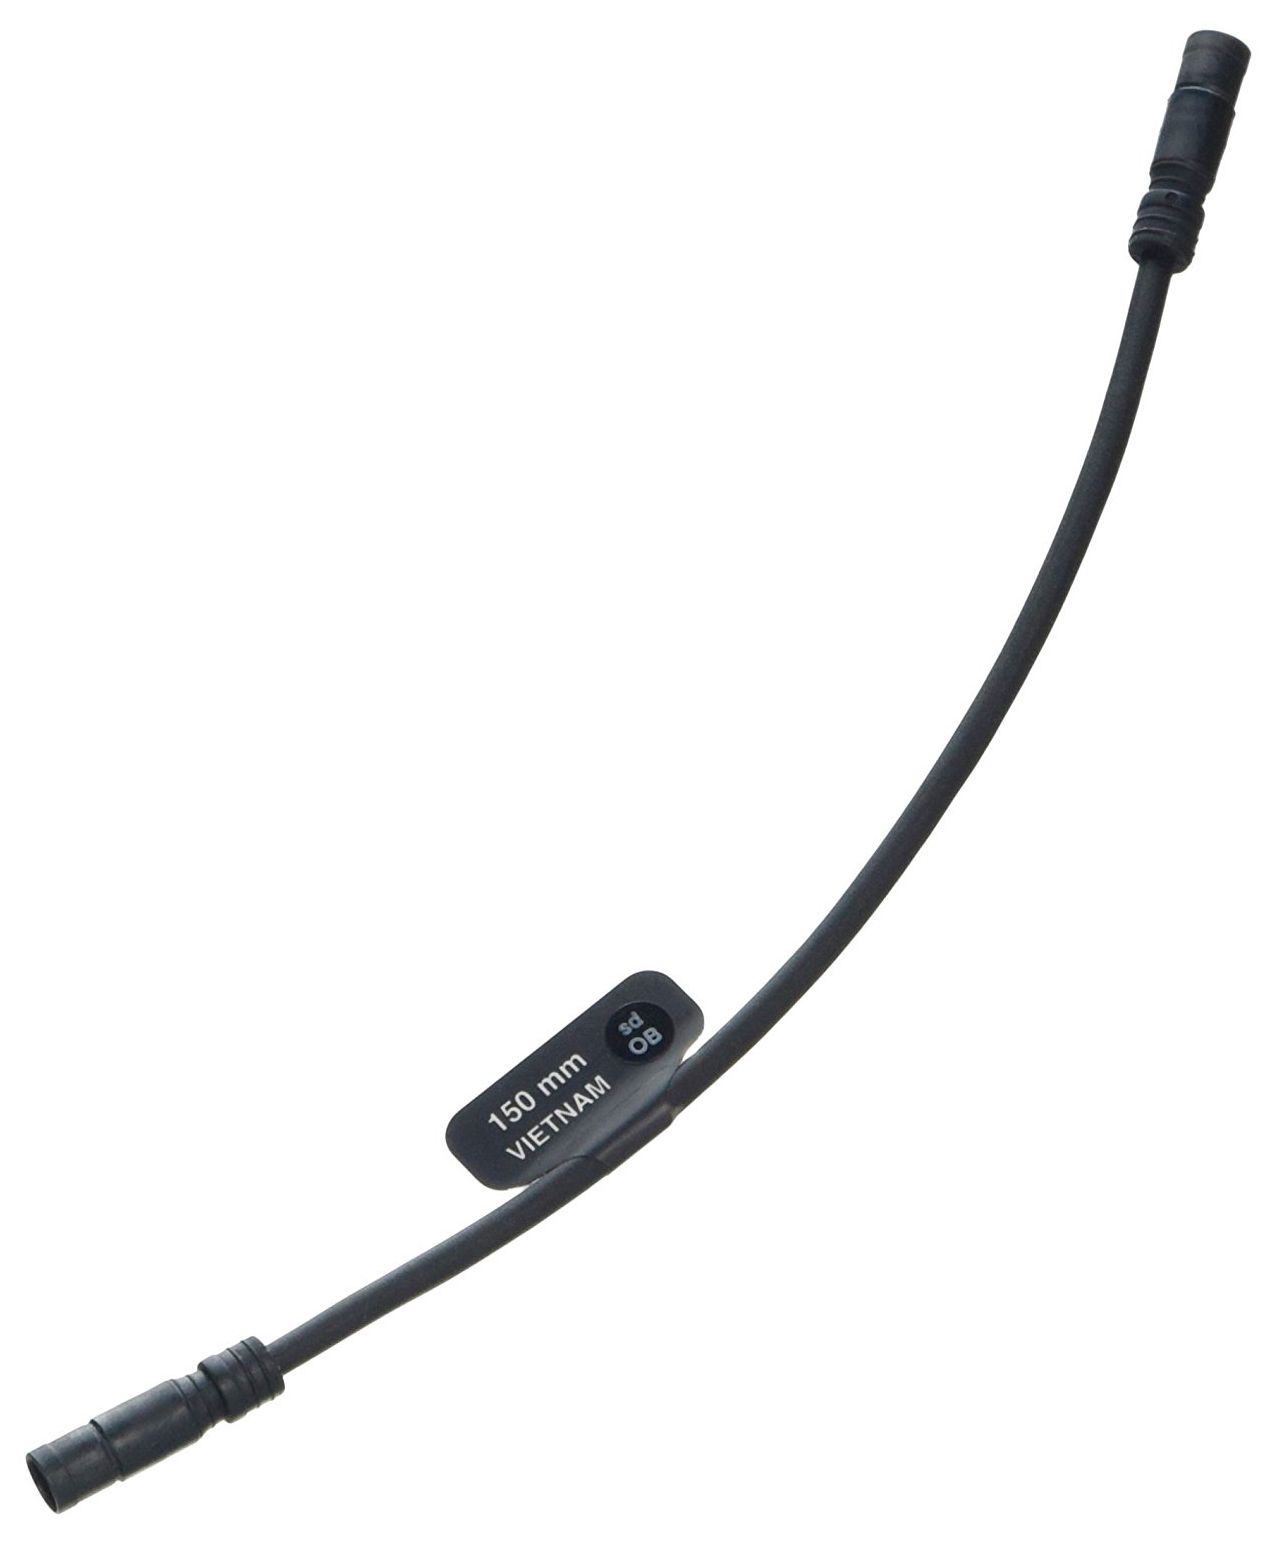  Комплектующие привода велосипеда Shimano электропровод Di2, EW-SD50, для Ultegra Di2, 150 мм